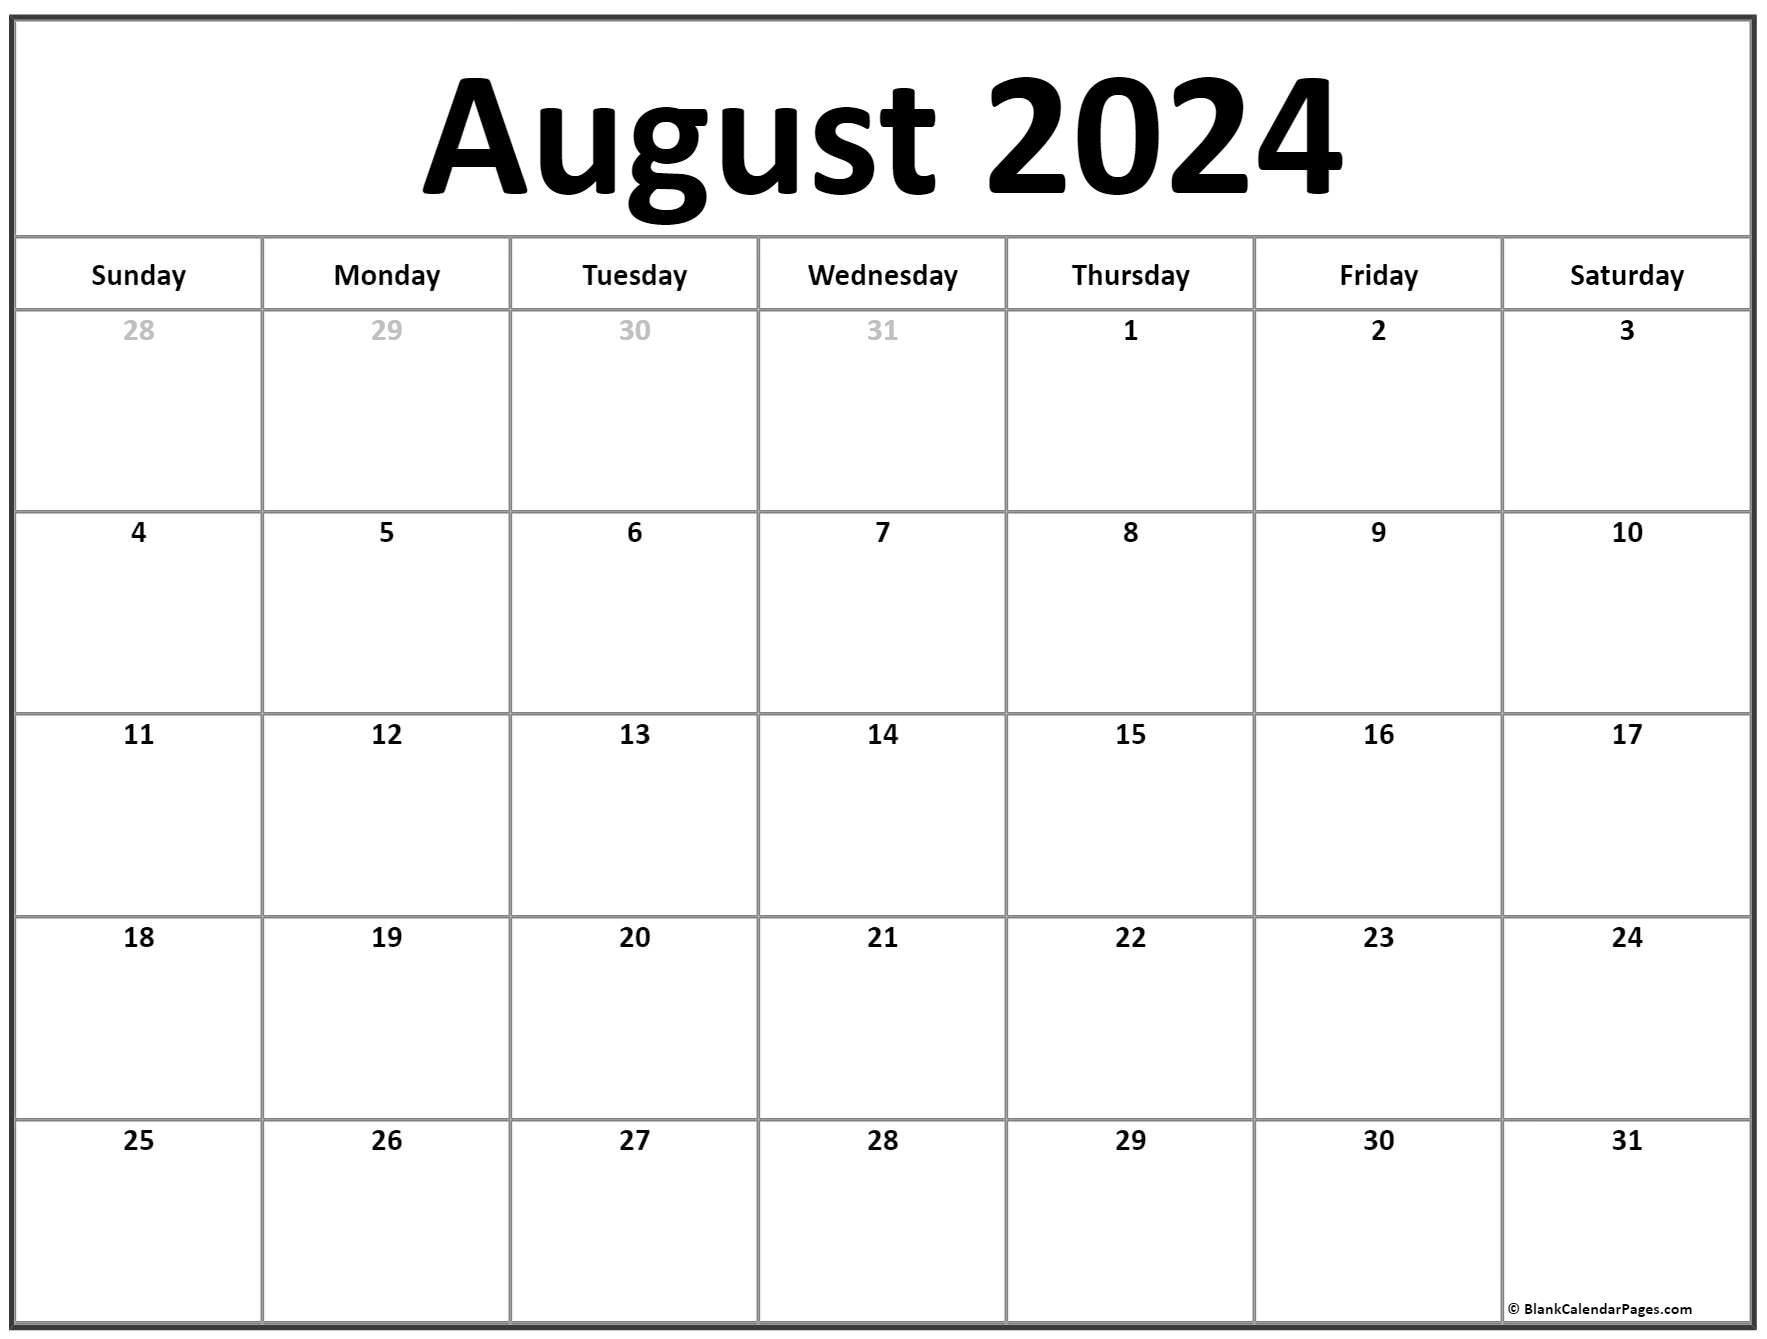 August 2021 calendar 56+ templates of 2021 printable